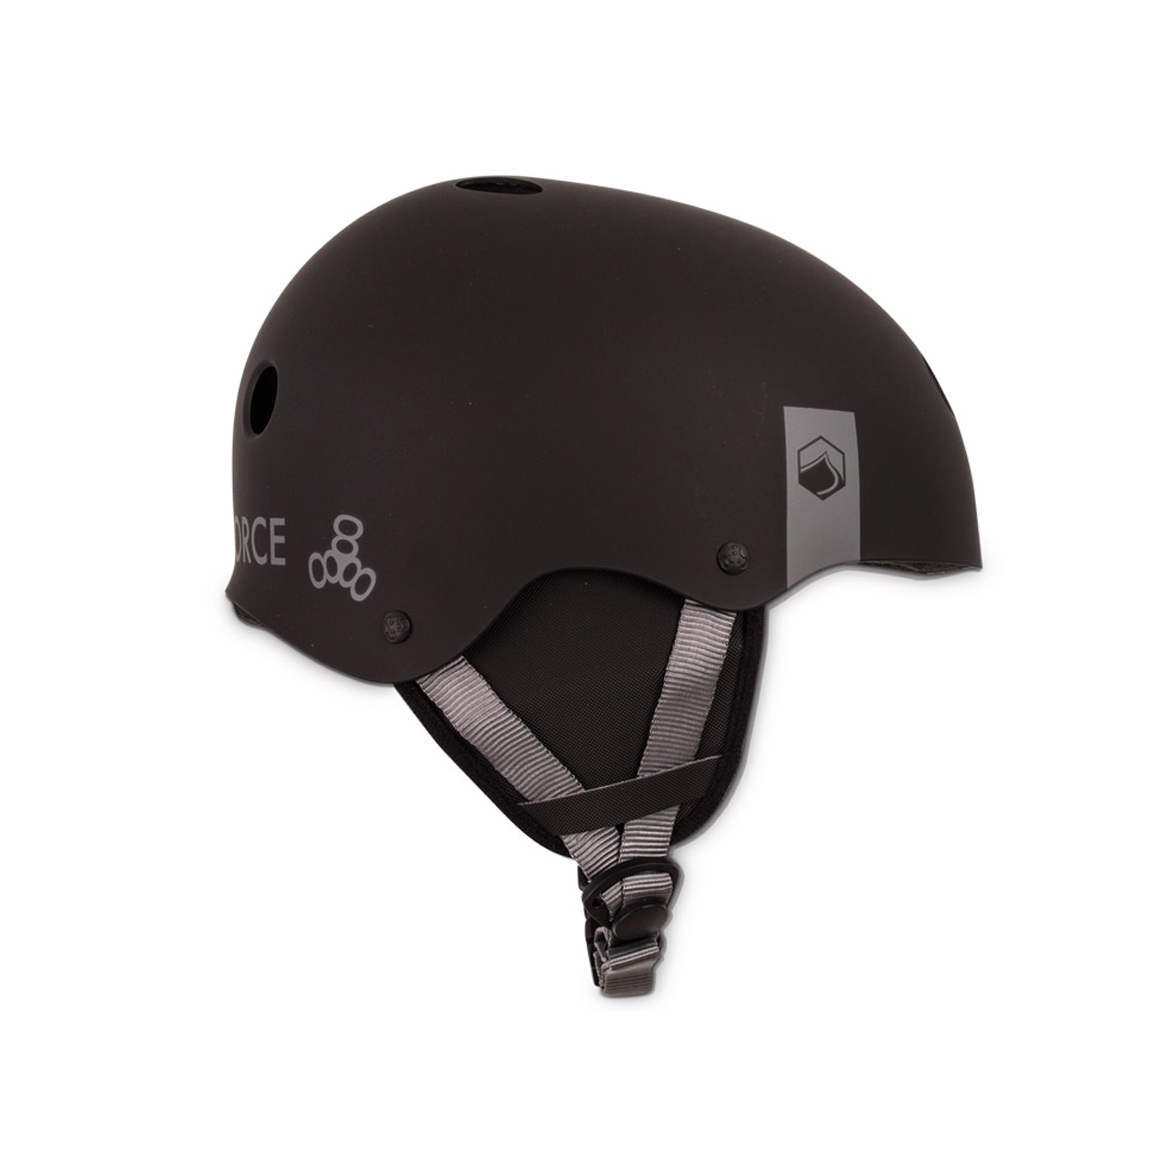 Liquid Force Flash helmet with ear flaps – black